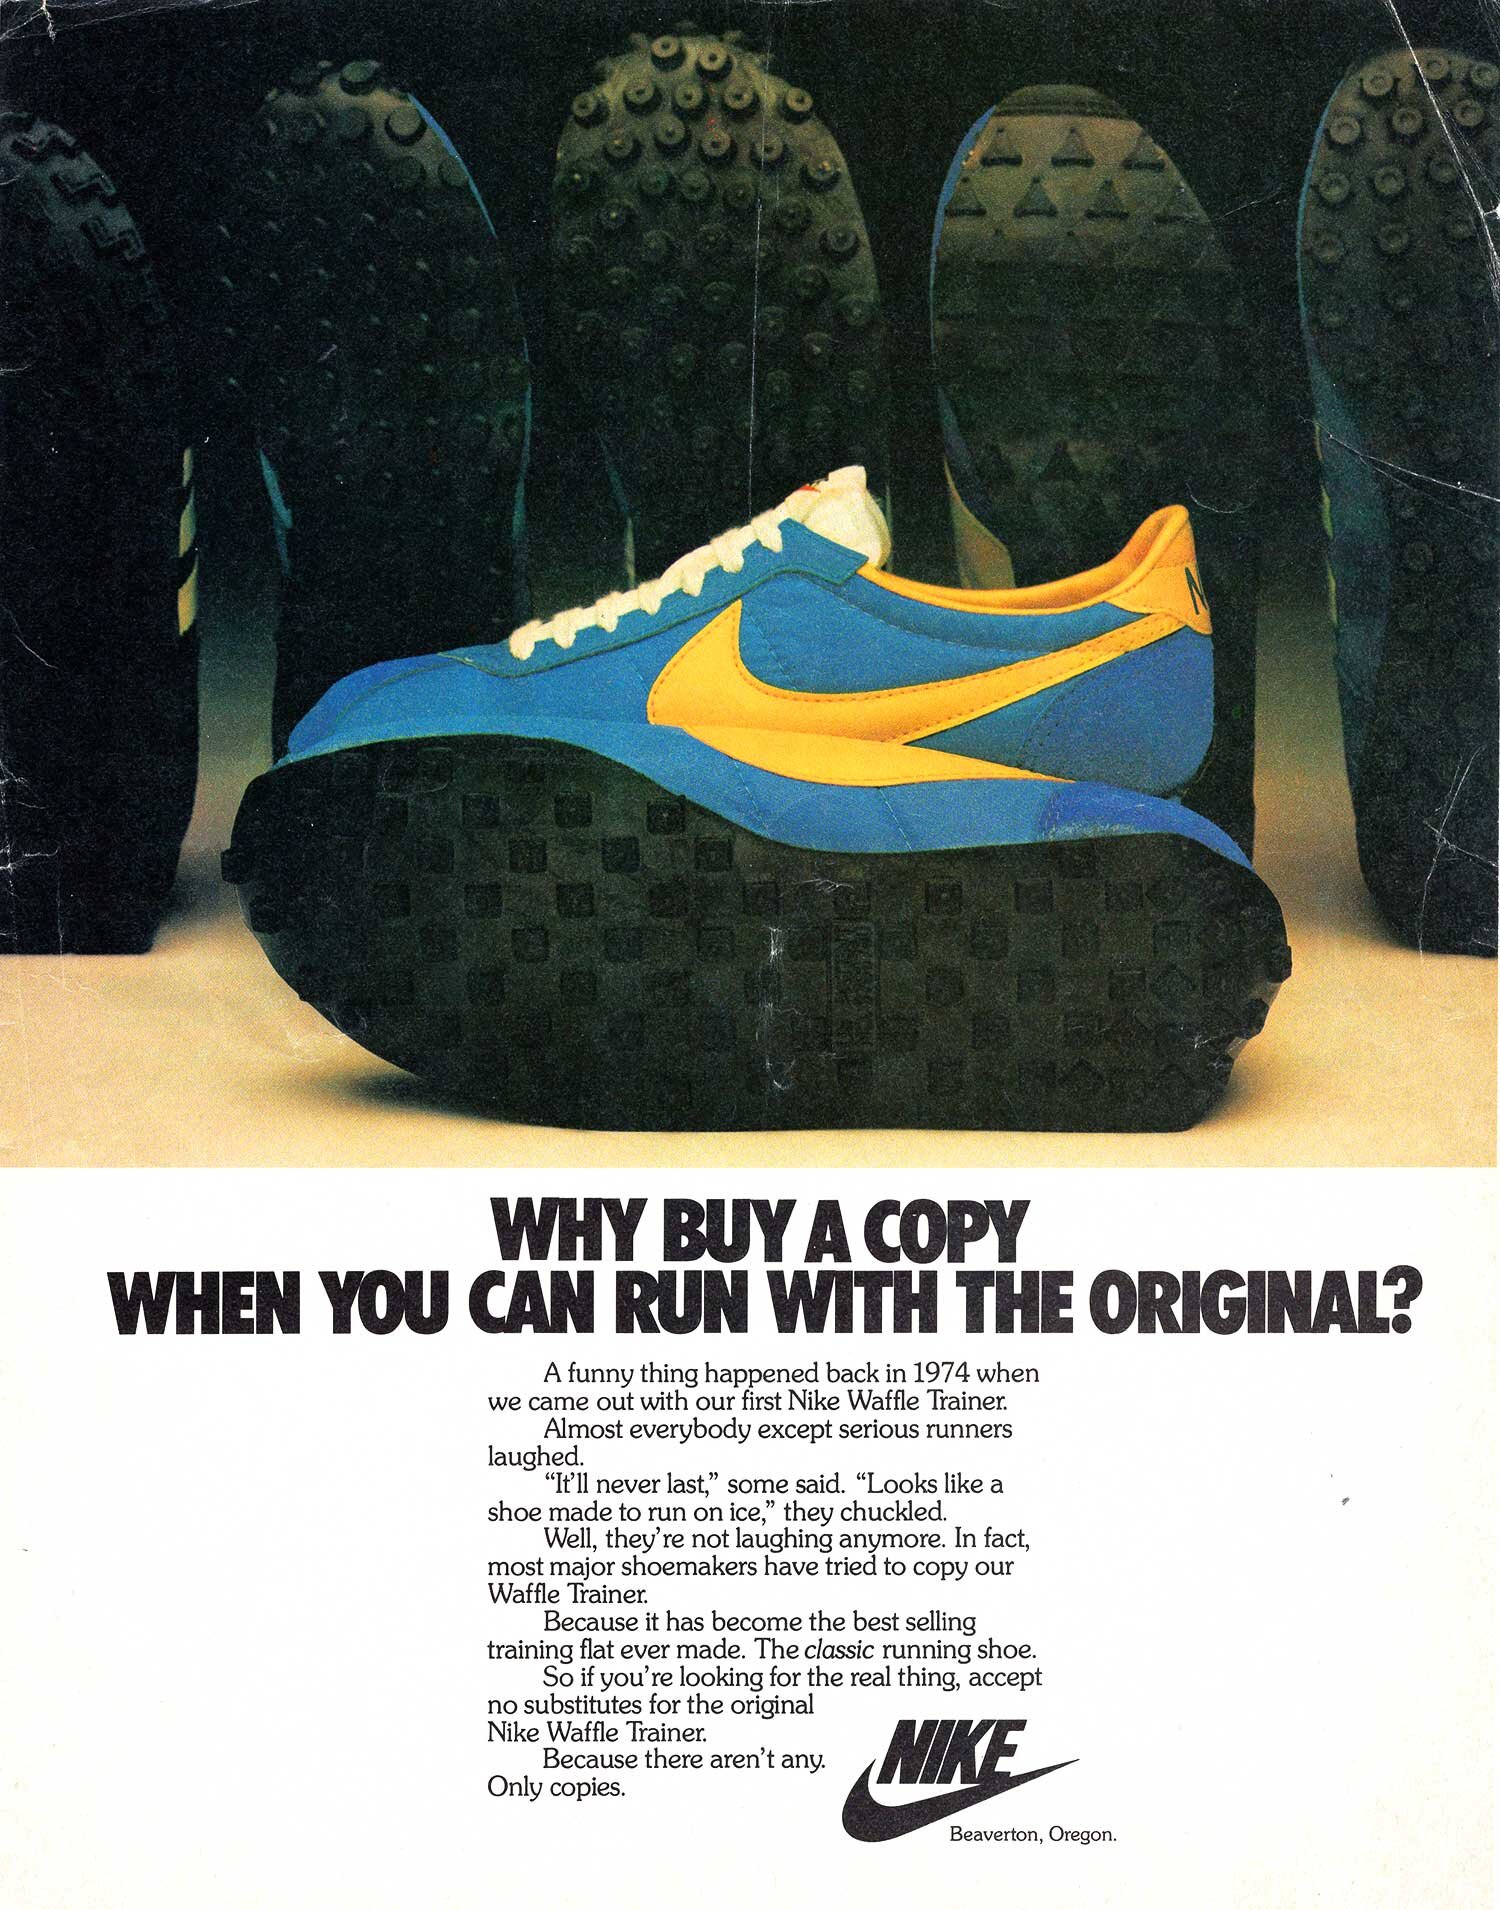 https://images.squarespace-cdn.com/content/v1/5ab94f5e3c3a536987d16ce5/1622047517071-OOB27DB32LAEU5GAL9E3/Nike+Waffle+1979+Vintage+Sneaker+ad+%40+The+Deffest